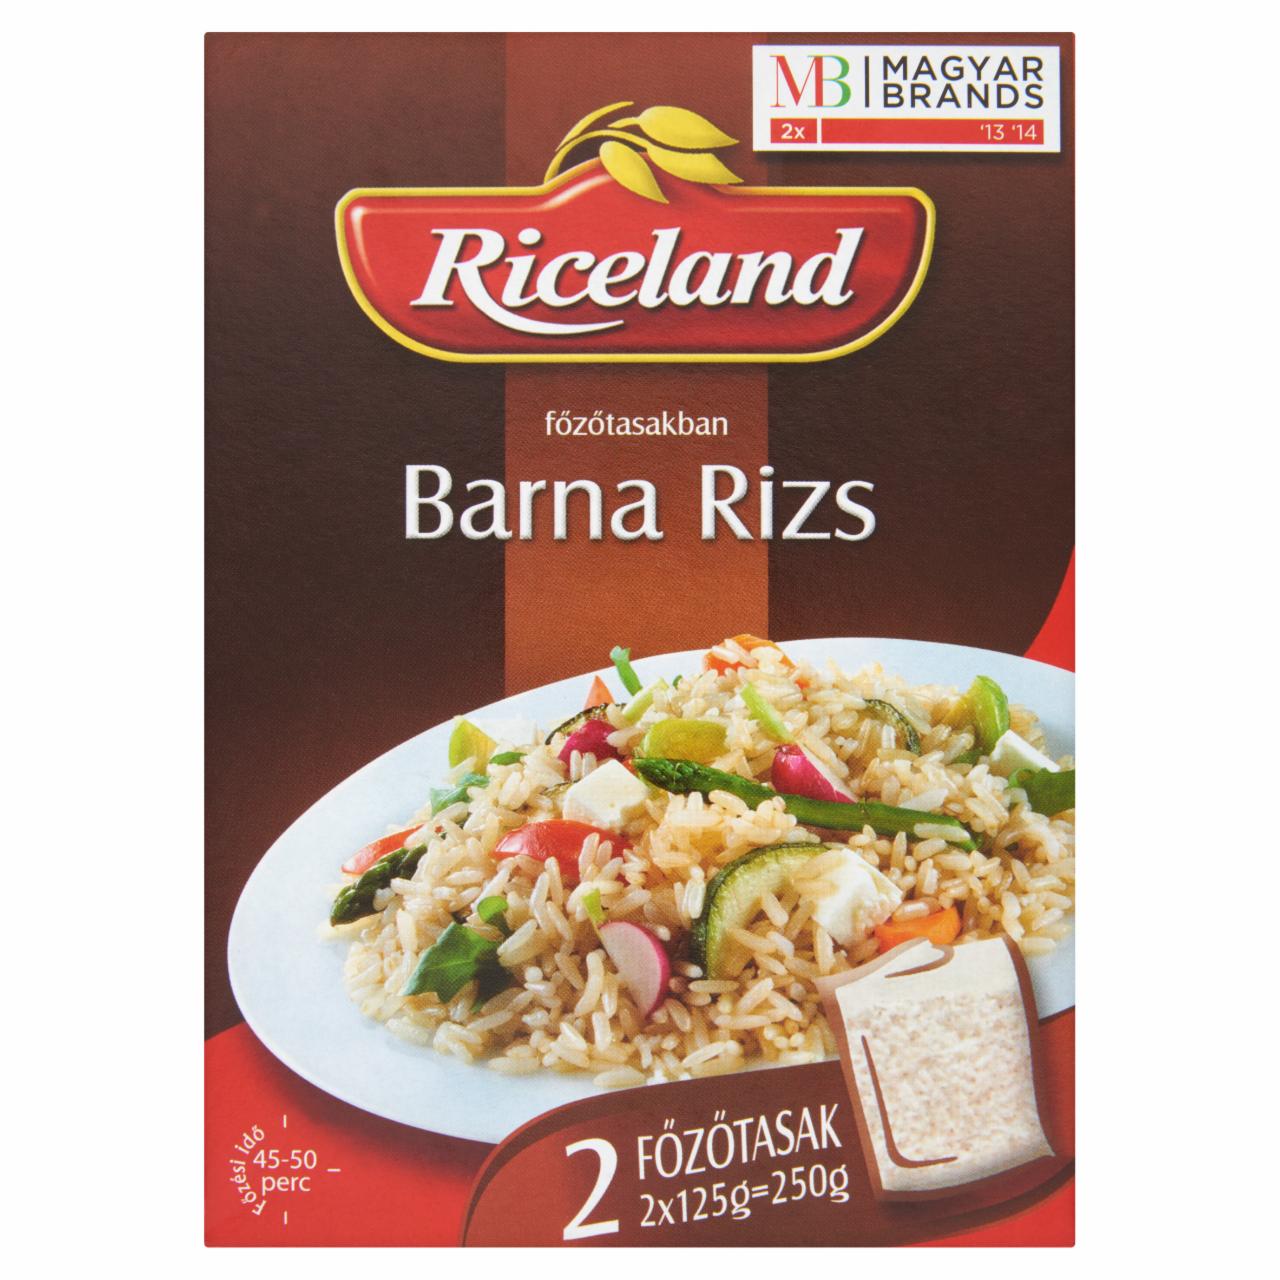 Képek - Riceland barna rizs főzőtasakban 2 x 125 g (250 g)